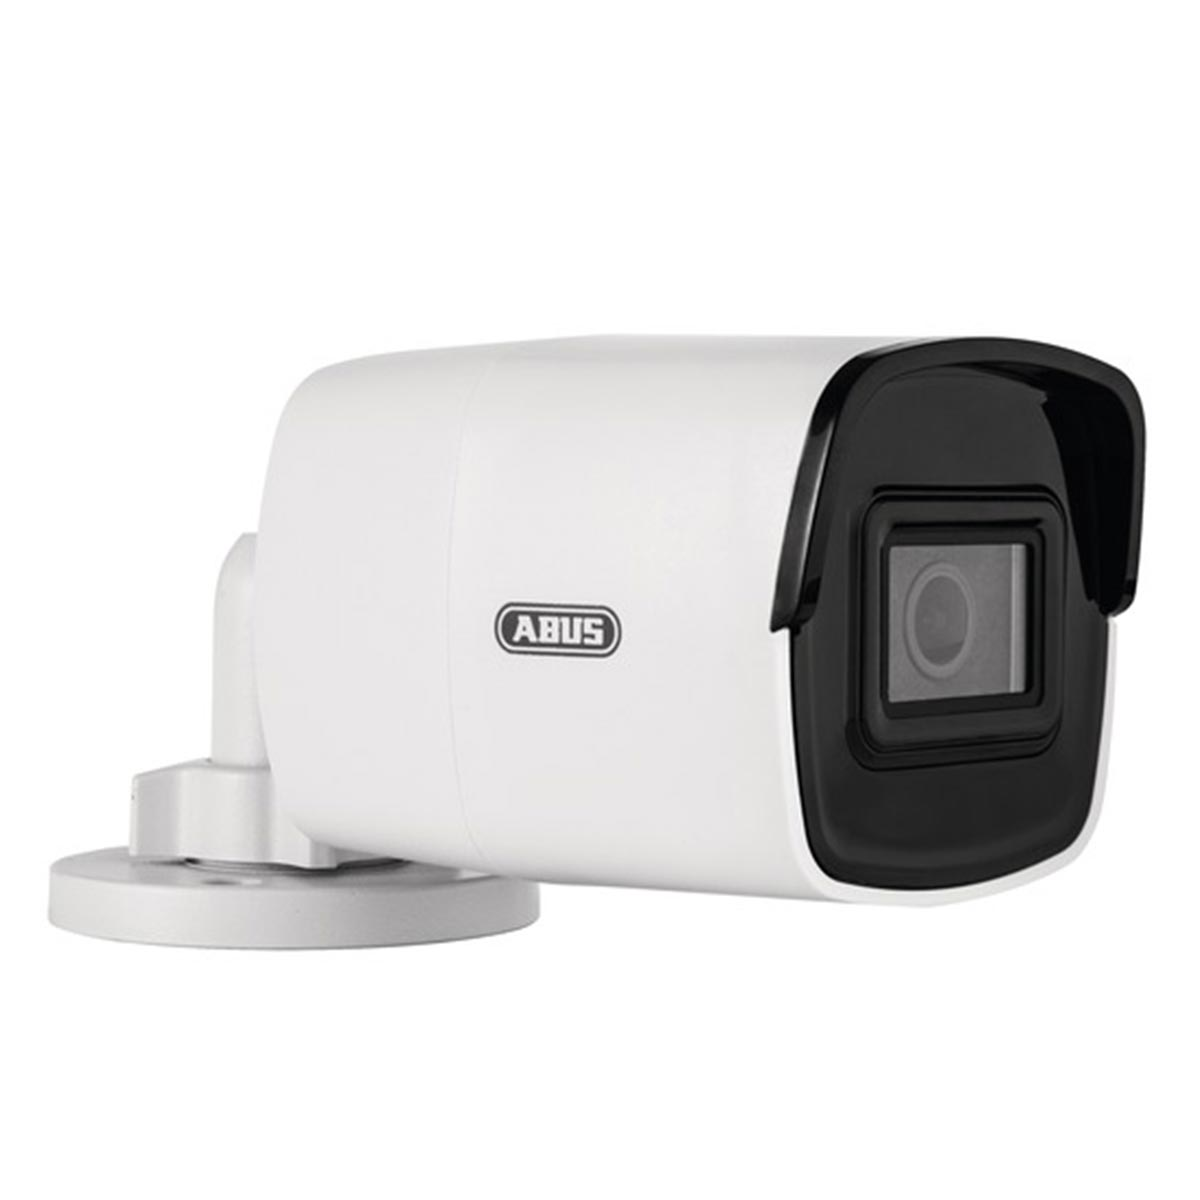 ABUS ABUS TVIP62510, Netzwerk-Überwachungskamera